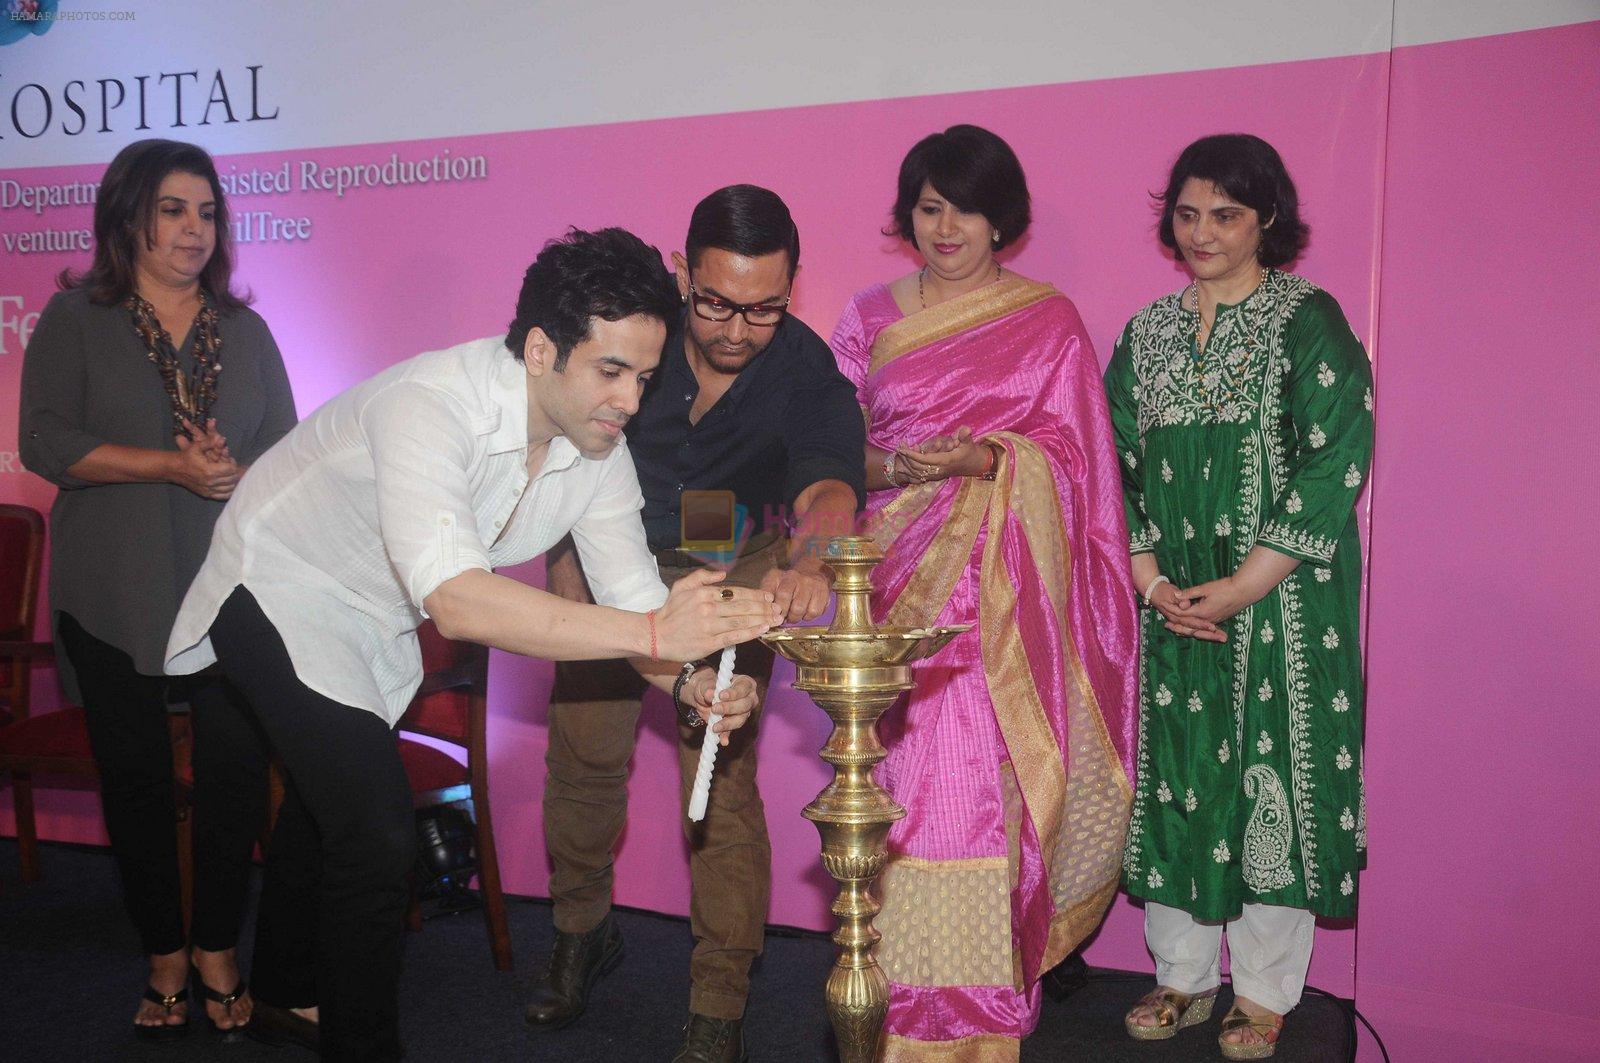 Aamir Khan, Tusshar Kapoor, Farah Khan launches Jaslok Fertility Tree on 15th Aug 2016